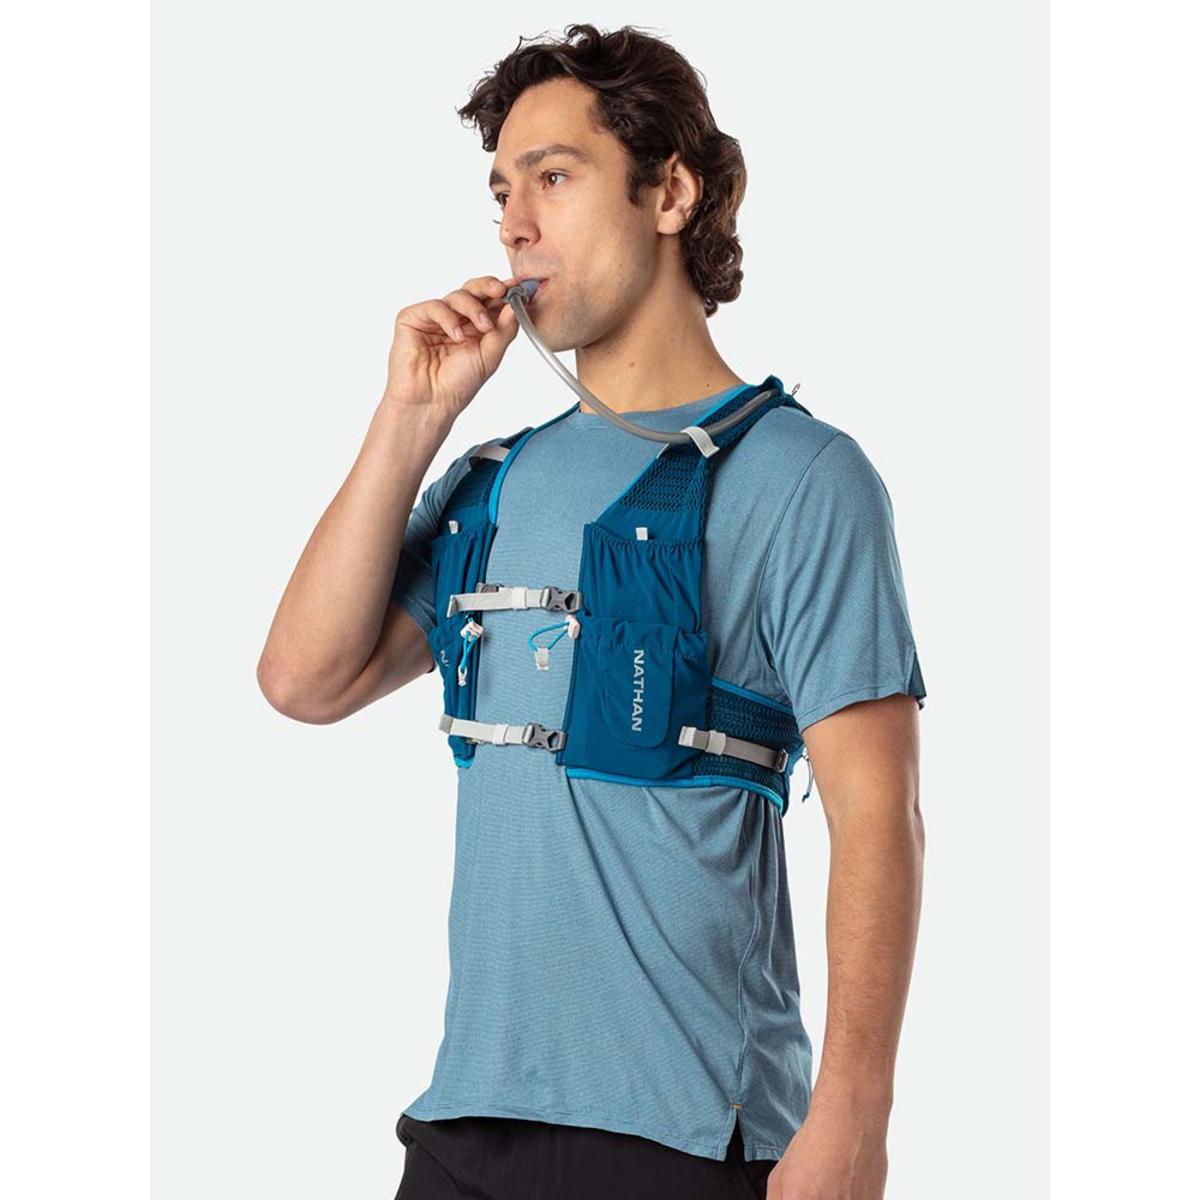 Nathan Unisex VaporAir Lite 4 Liter Hydration Vest